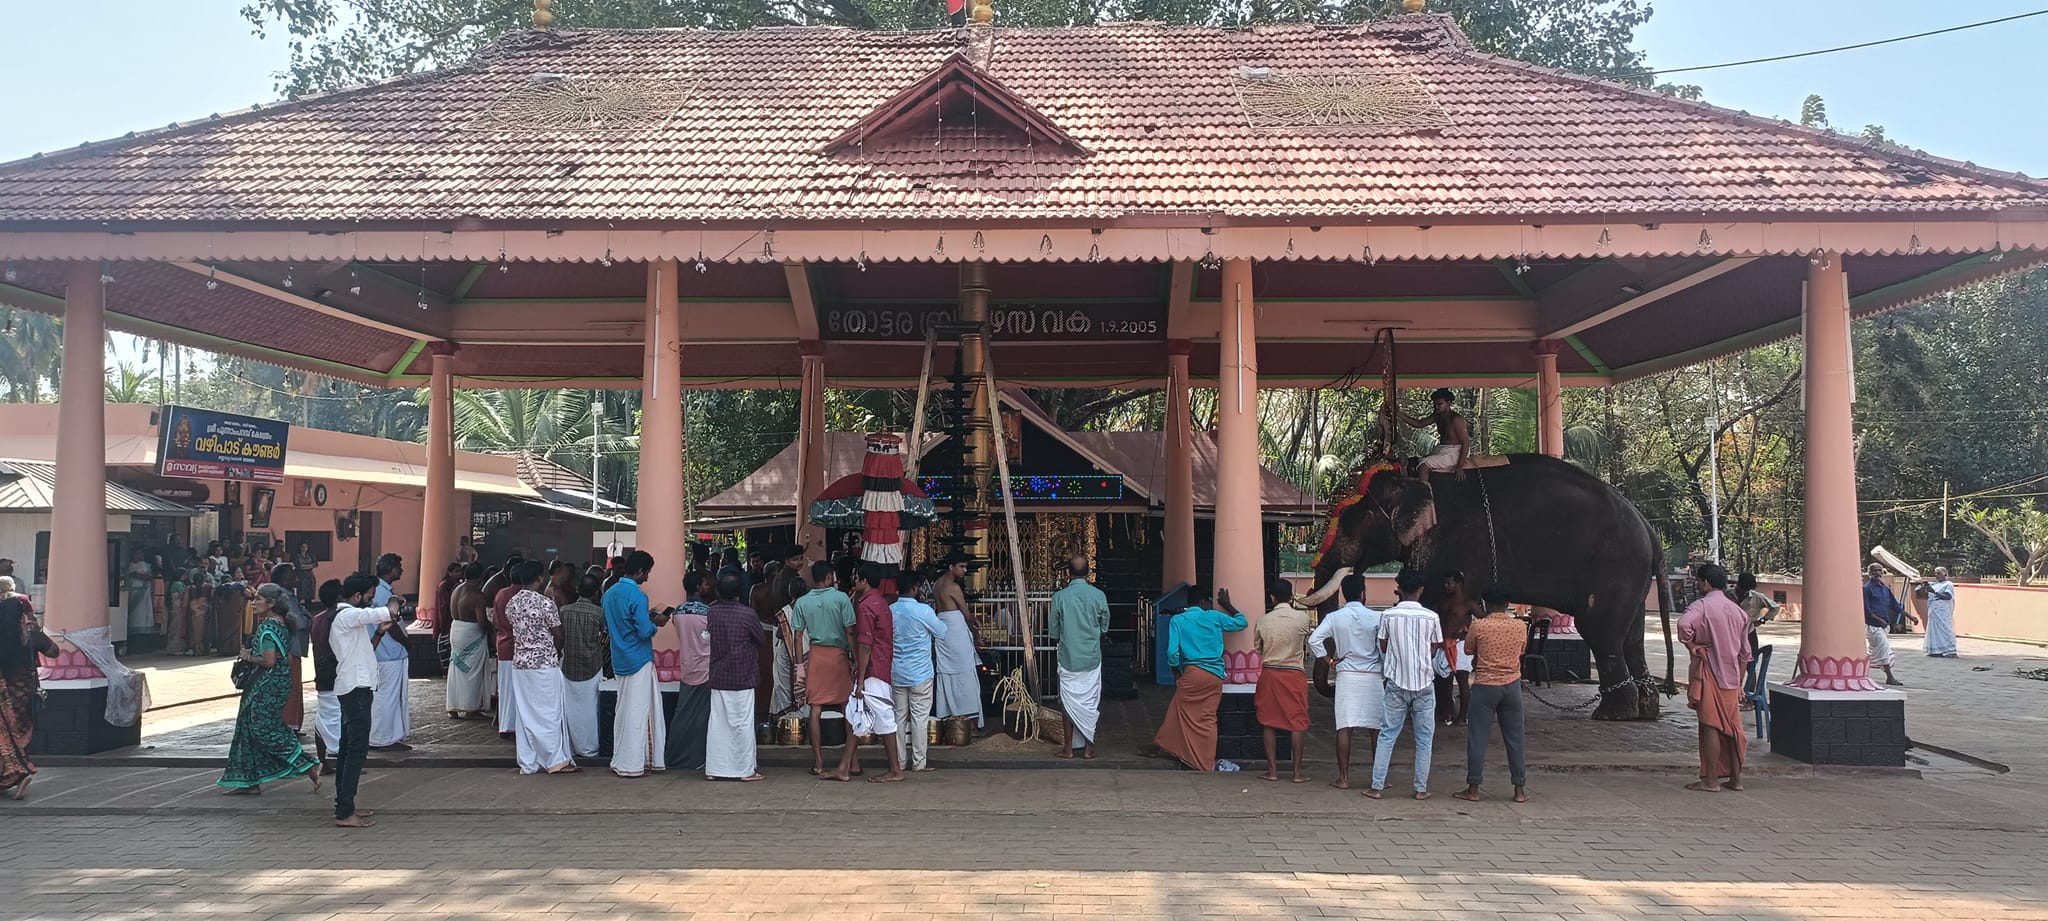 Sree Punnampara Bhagavathi Temple 